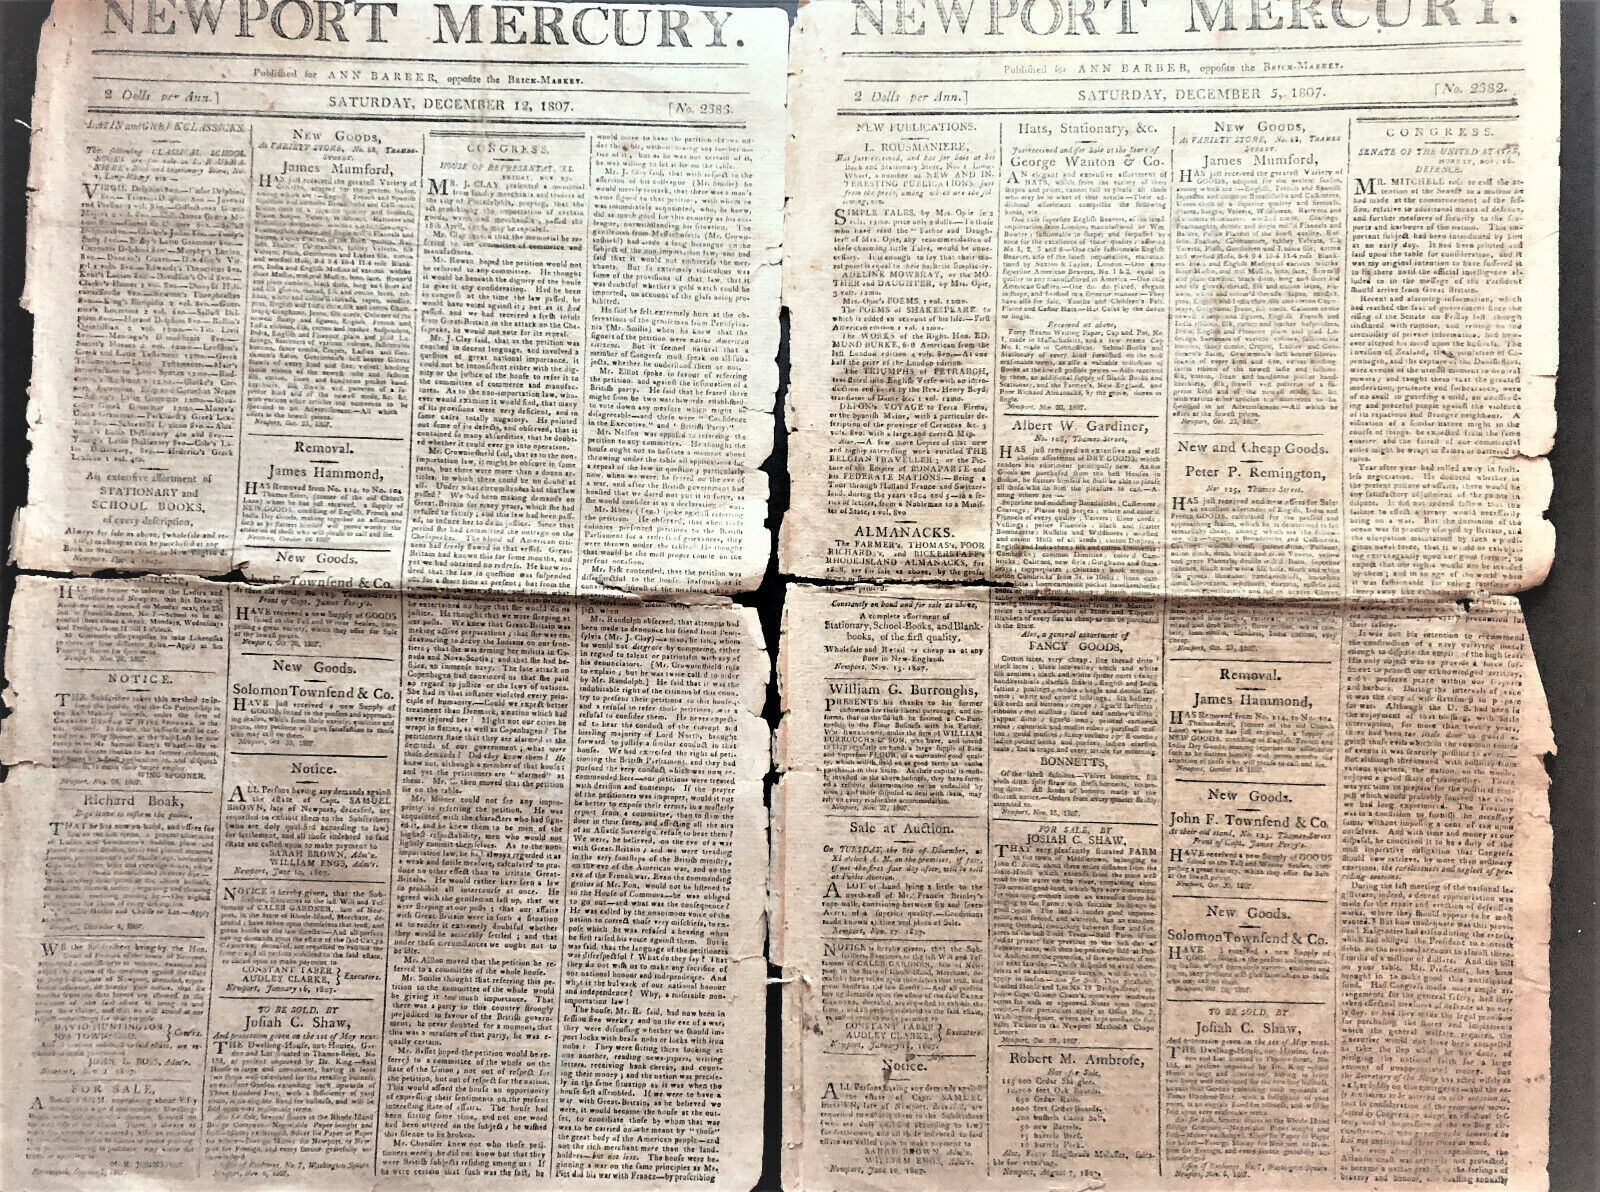 2 Newport Mercury Newspapers 1807, News of Congress, European Affairs, Customs &